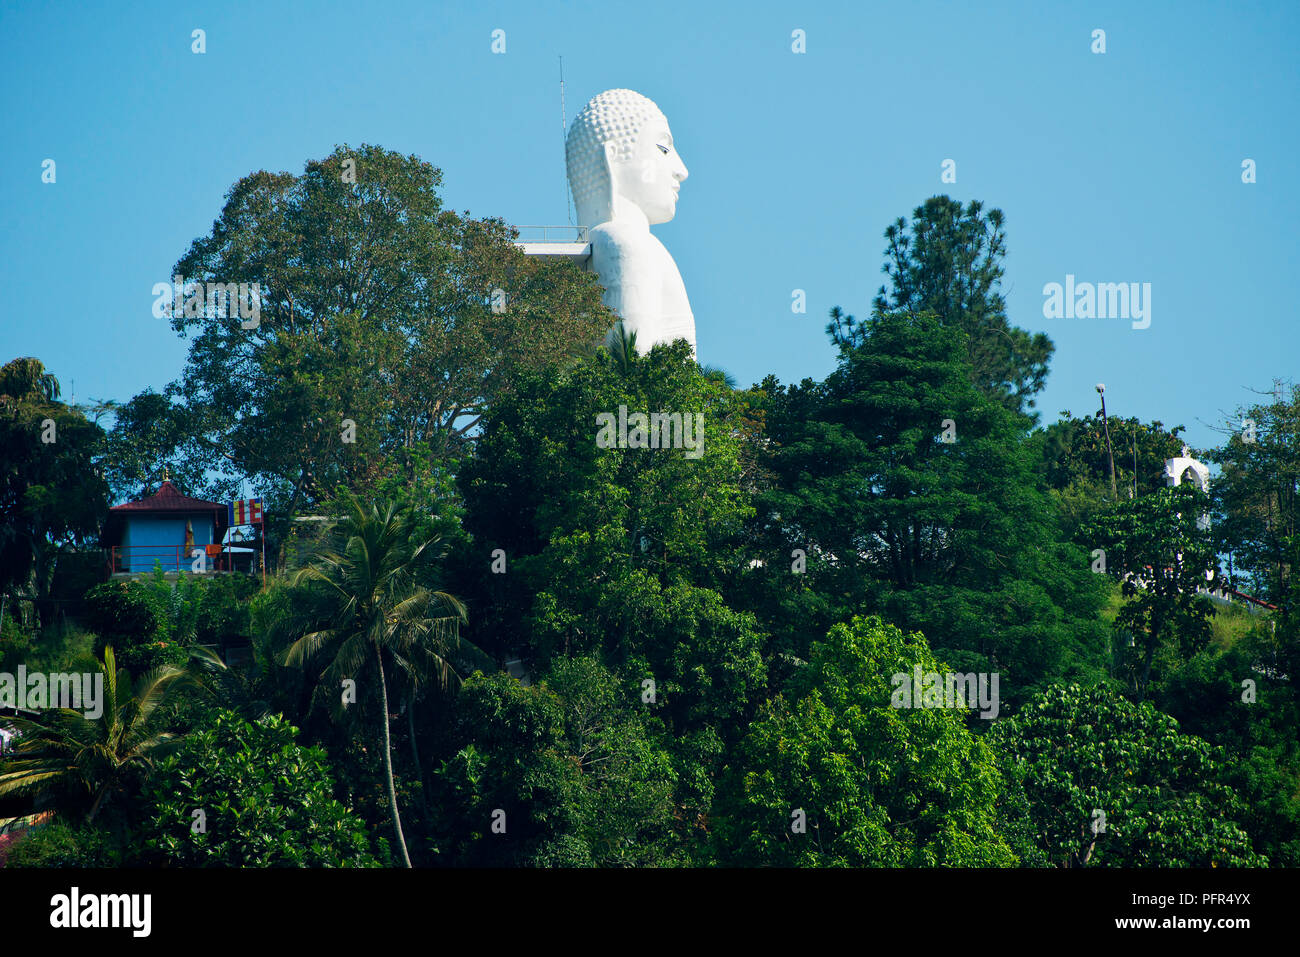 Sri Lanka, Central Province, Kandy, Bahiravokanda Vihara buddha statue overlooking trees Stock Photo